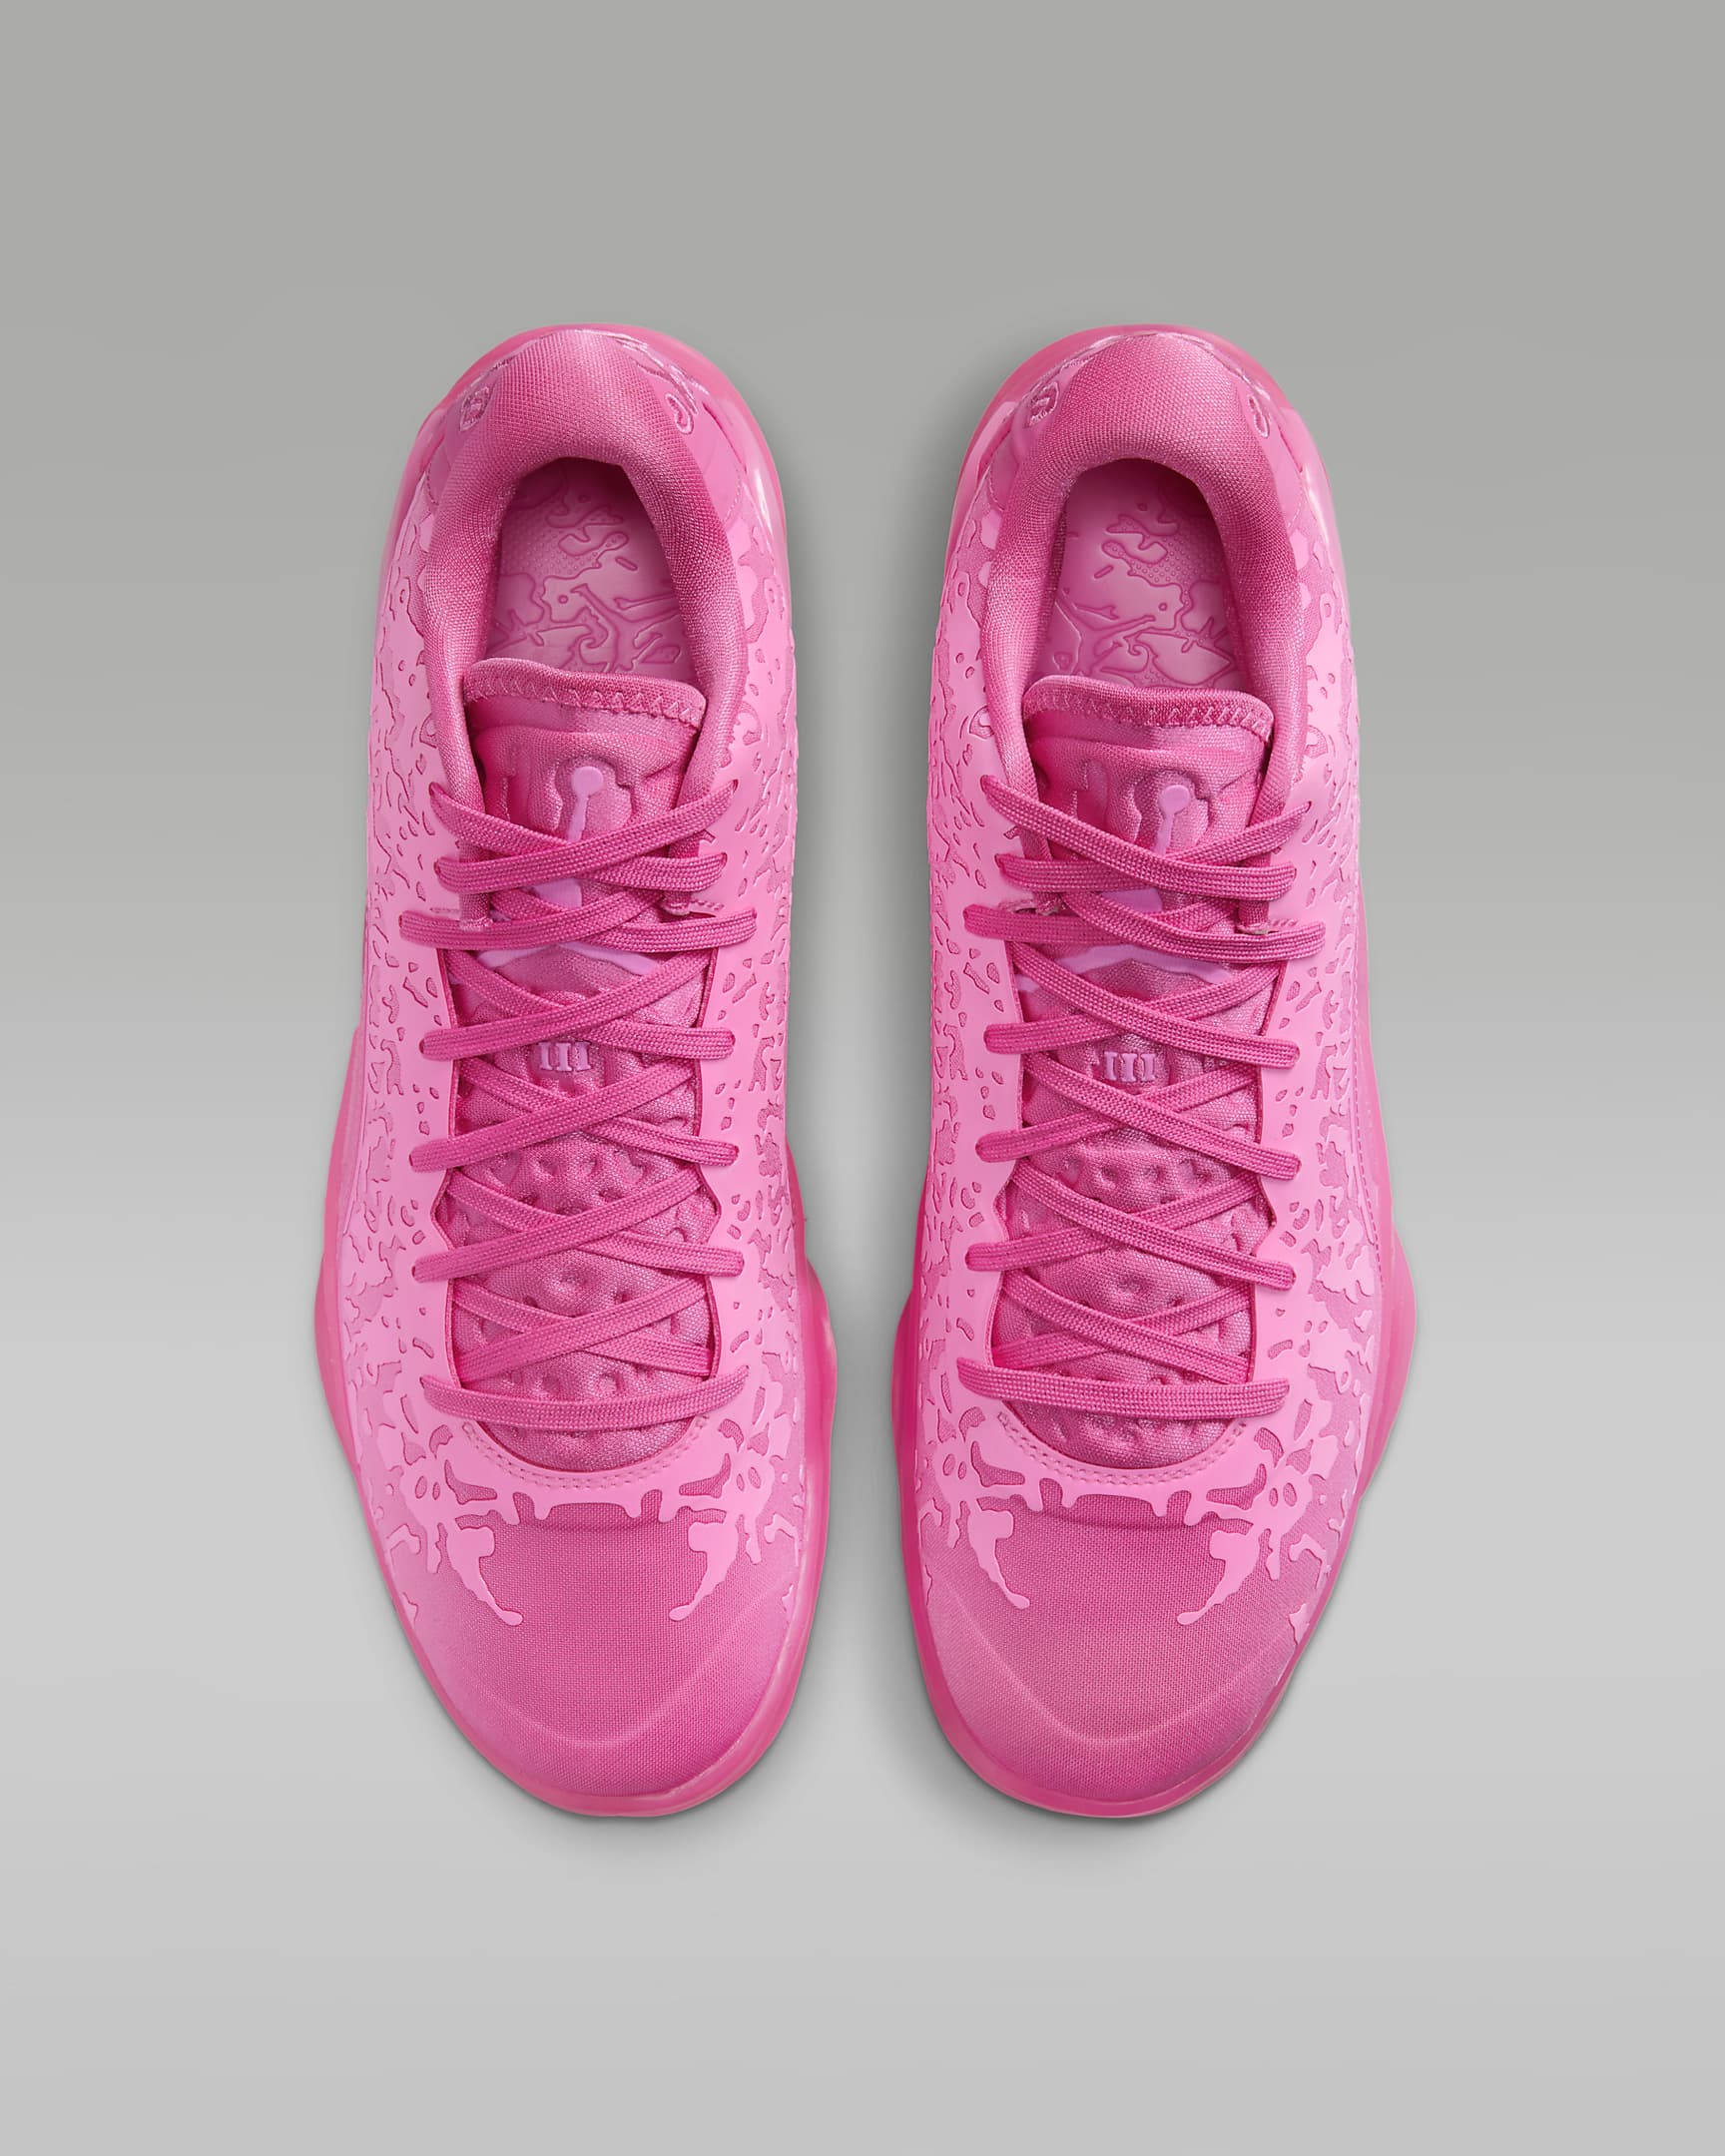 Zion 3 Basketball Shoes. Nike ZA